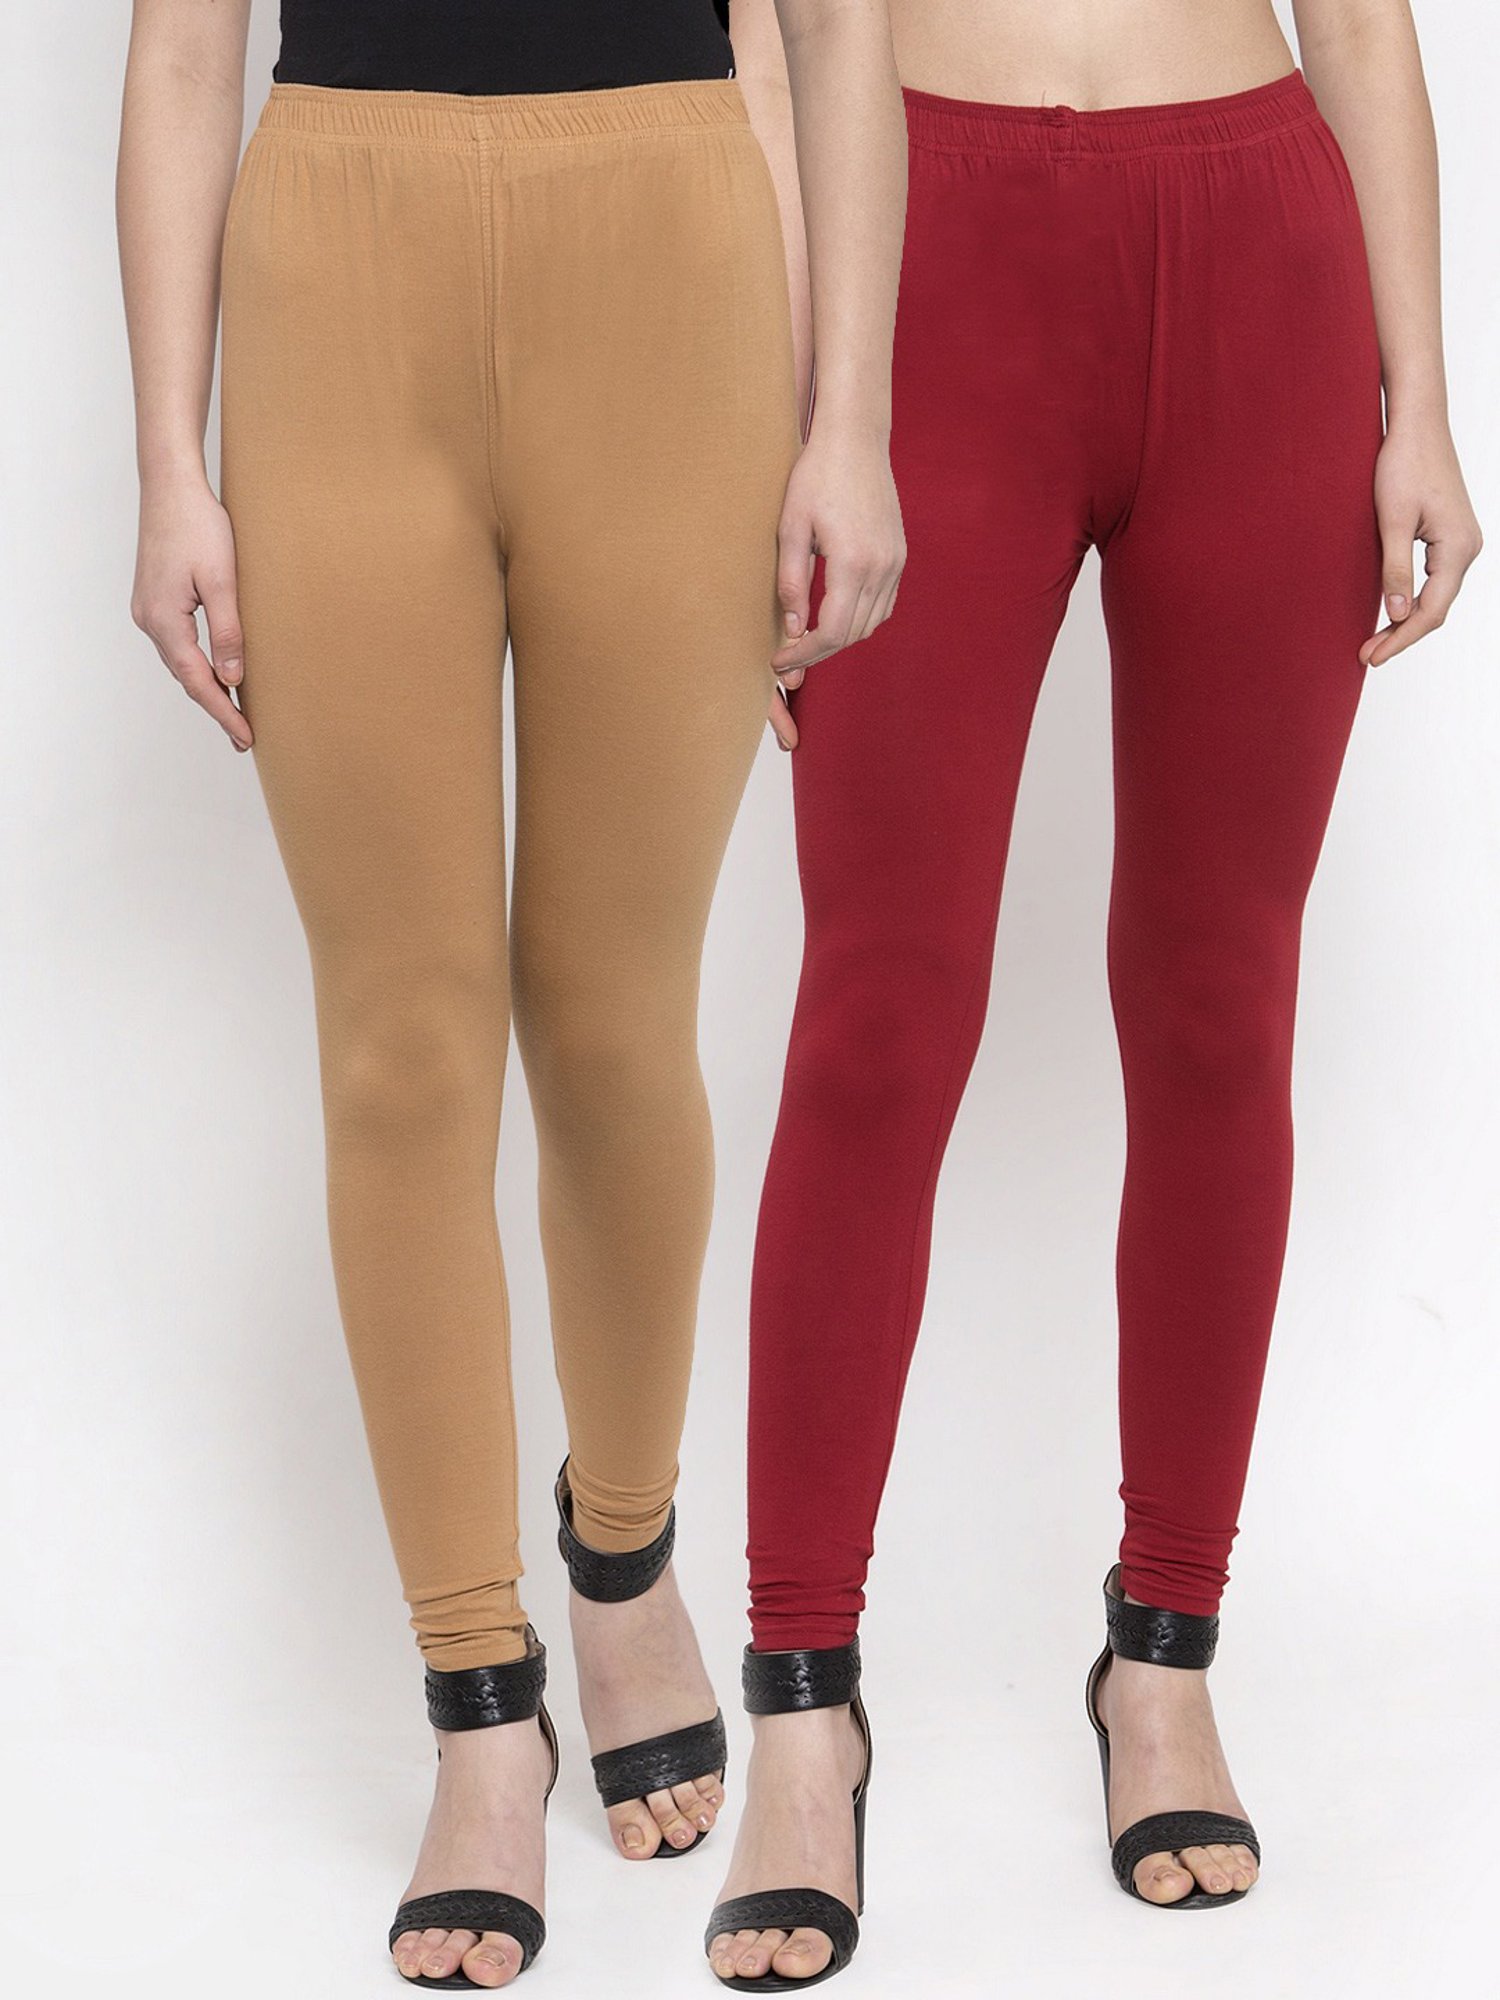 Buy TAG 7 Red & Brown Leggings - Pack of 2 for Women's Online